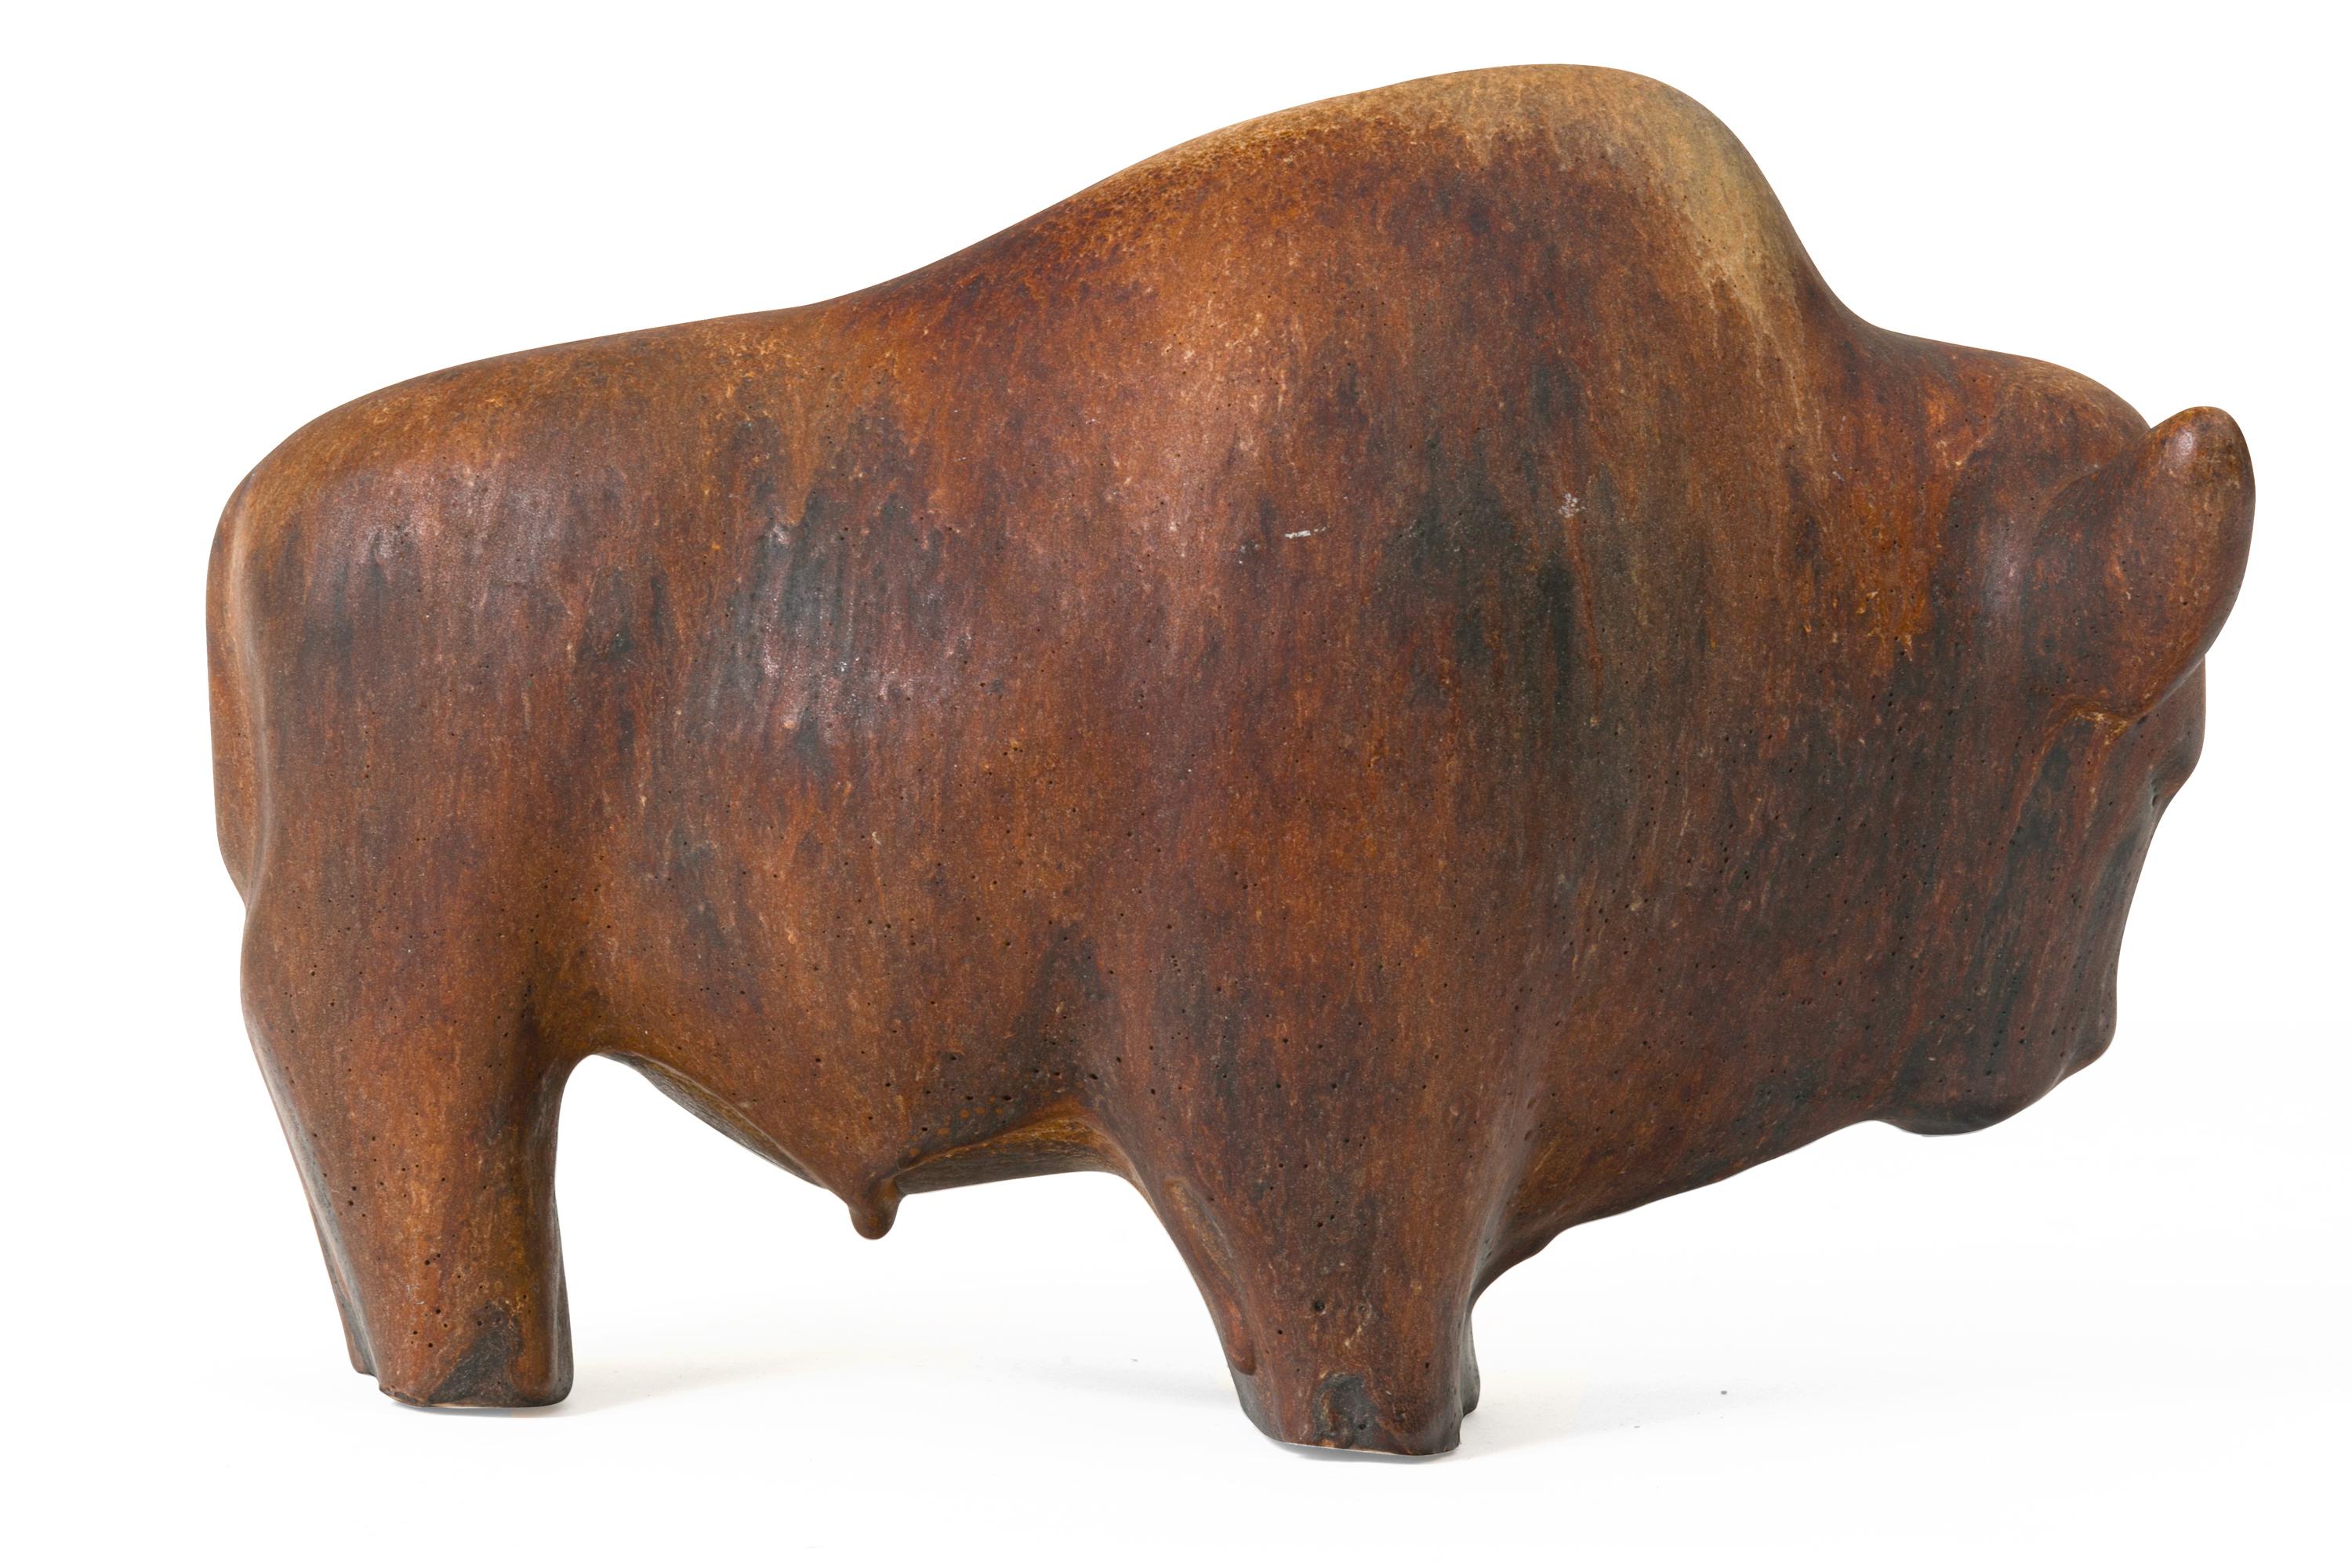 A beautifully glazed figurative ceramic bull from Ruscha Keramik.